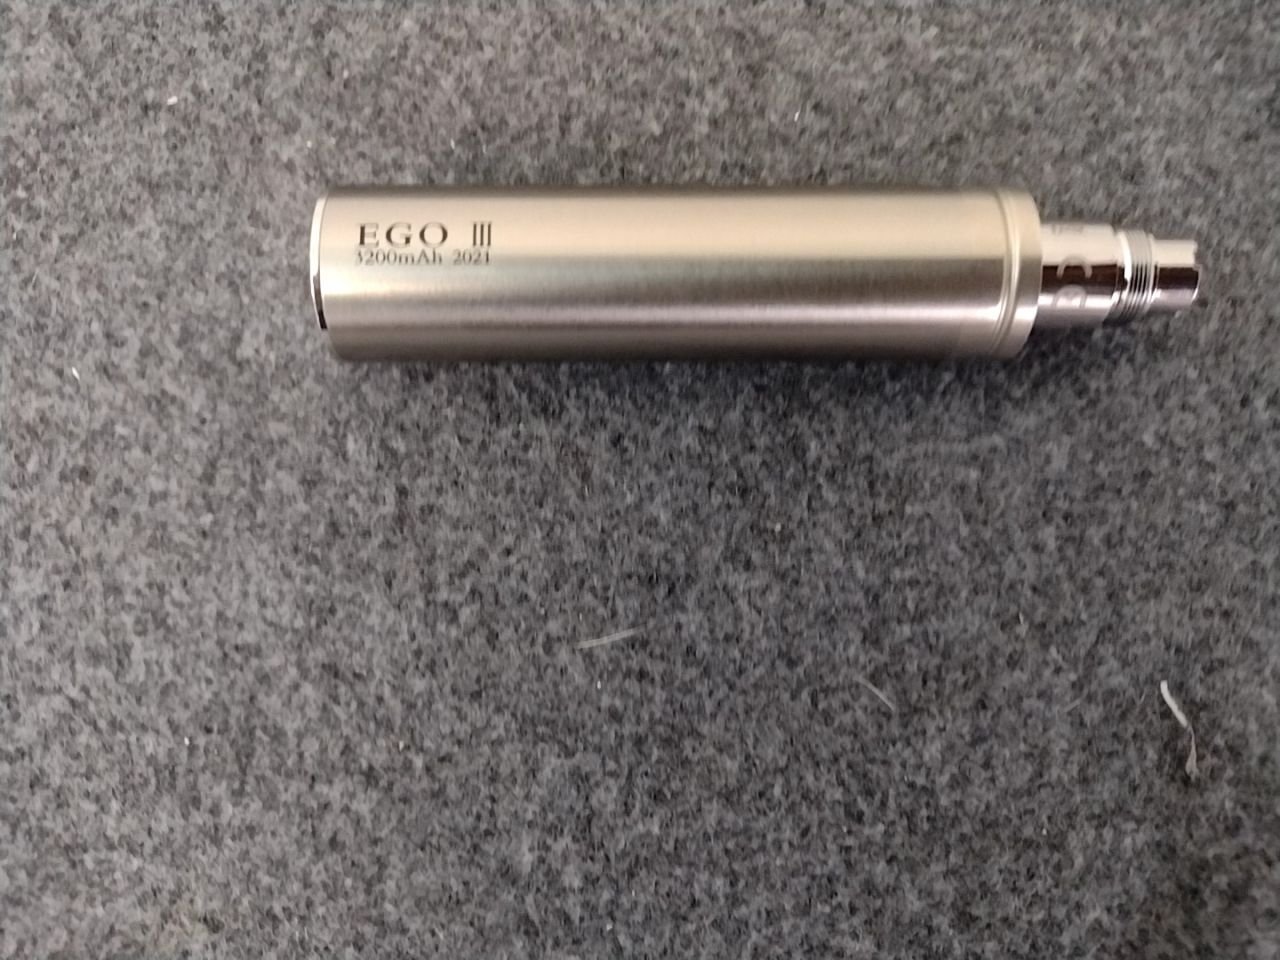 Baterie k elektronické cigaretě BuiBui eGo III 3200mAh